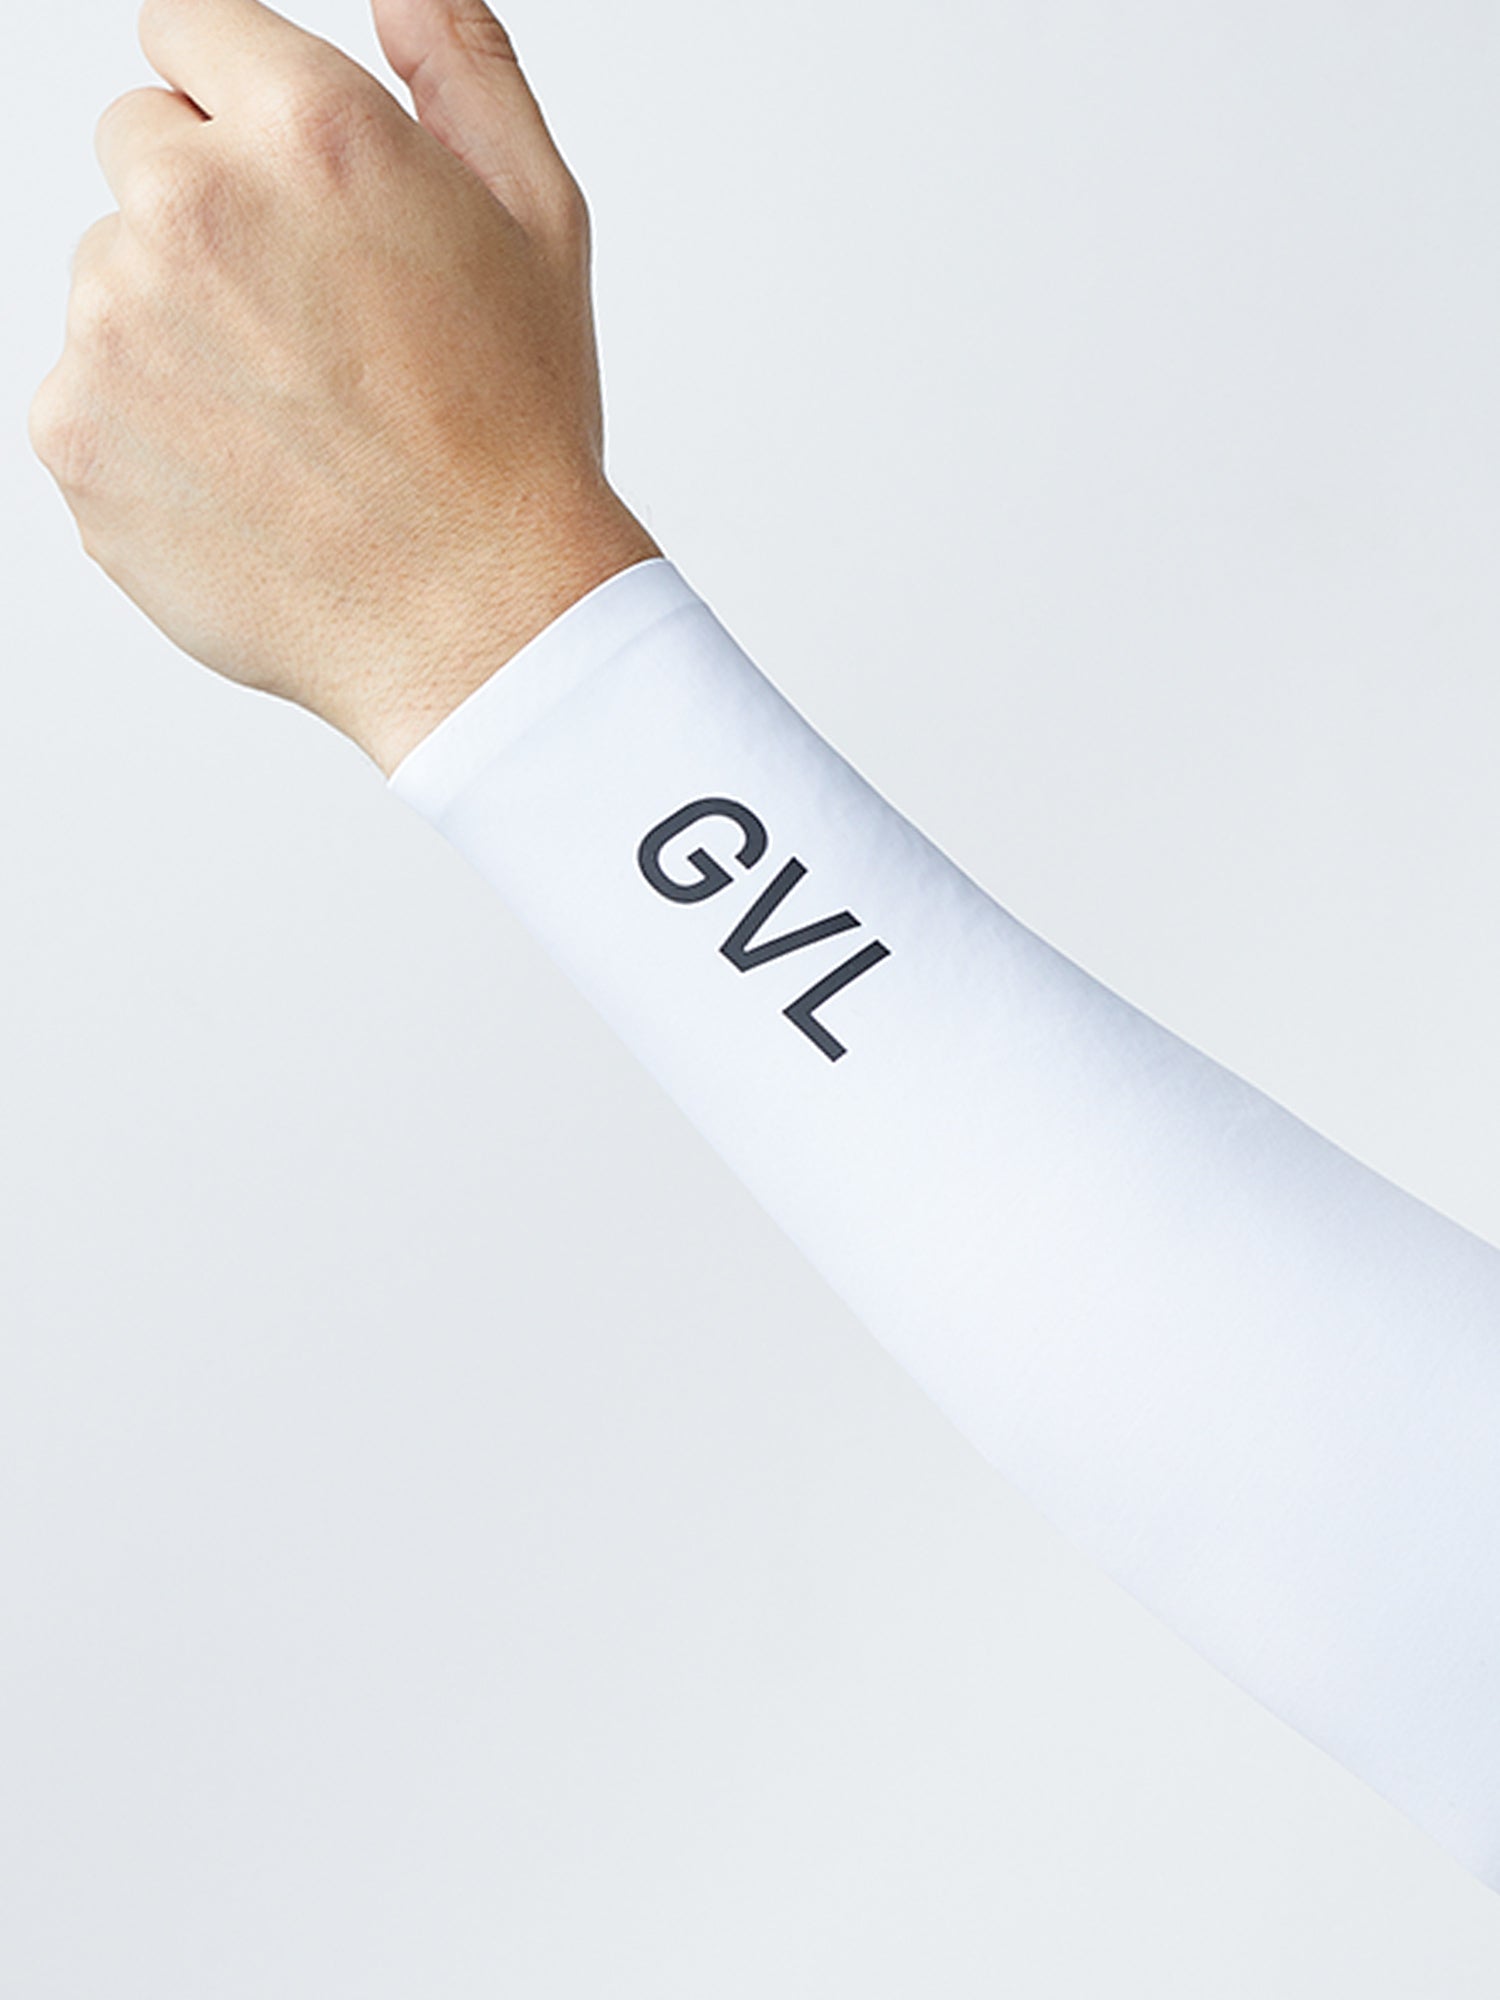 GVL Sleeves